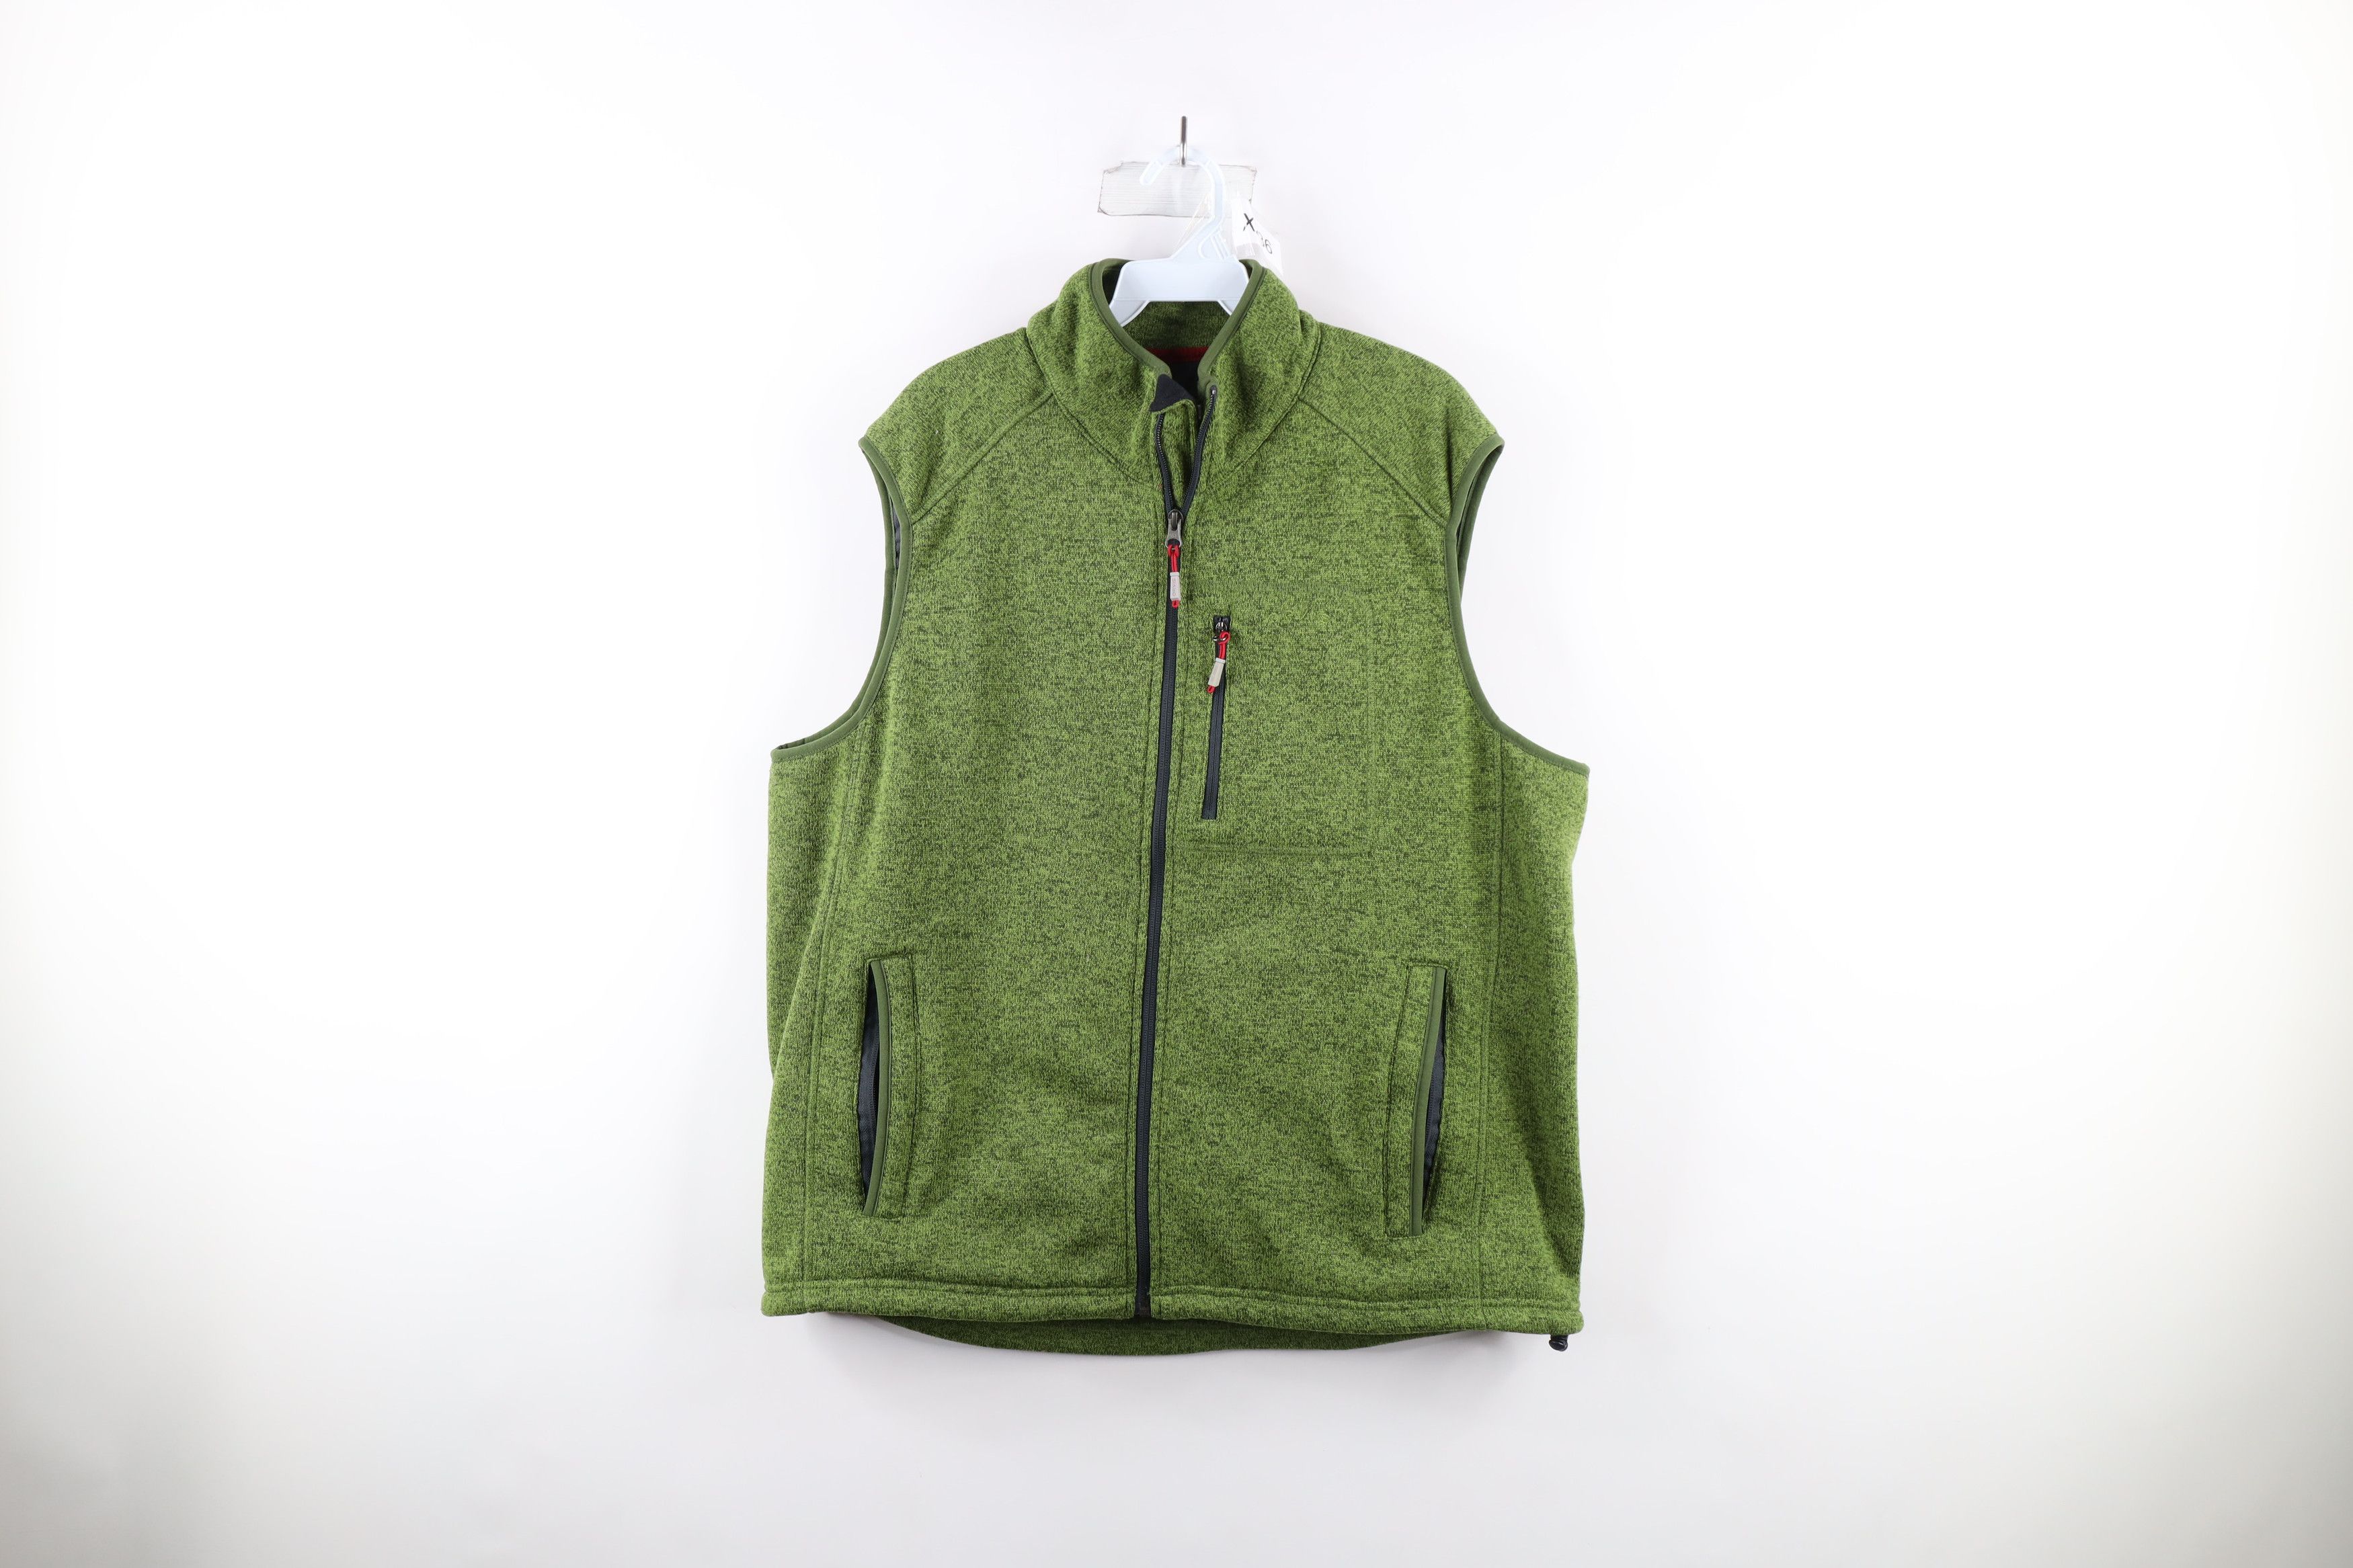 Vintage vintage Daiwa performance fishing gear vest